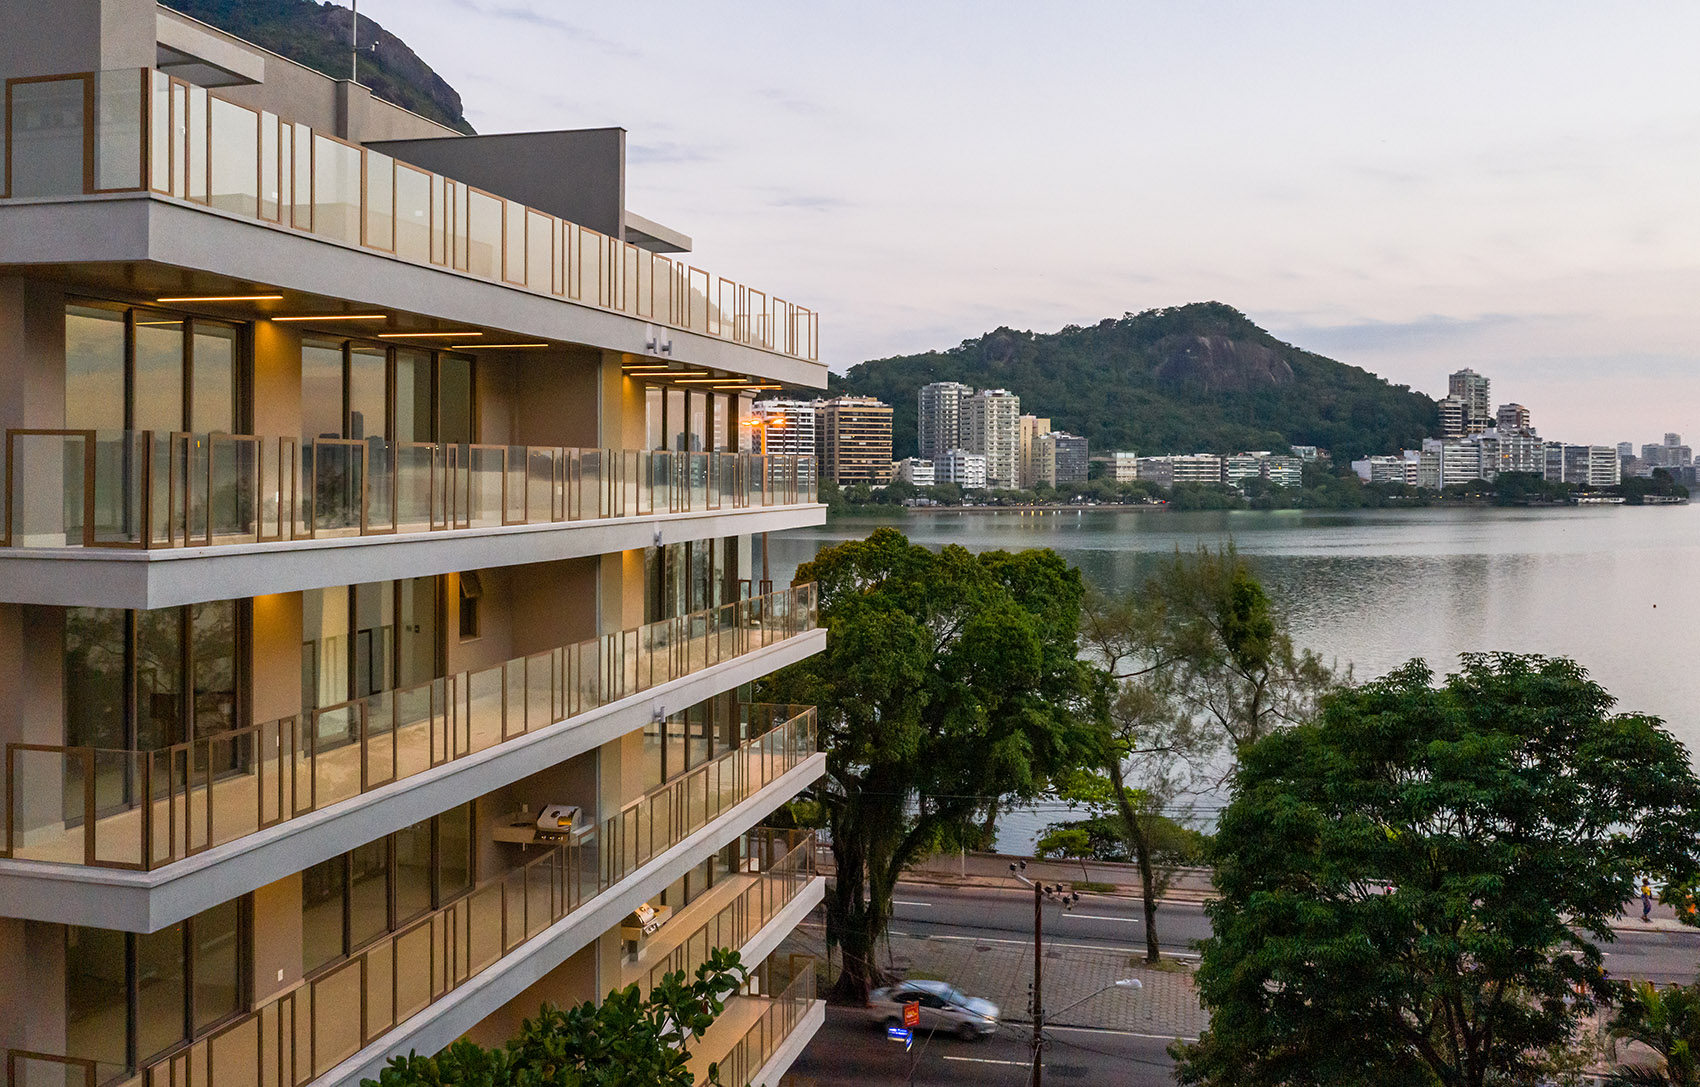 Borges 3647公寓楼，巴西/可以看到基督神像与泻湖景观的公寓楼-13